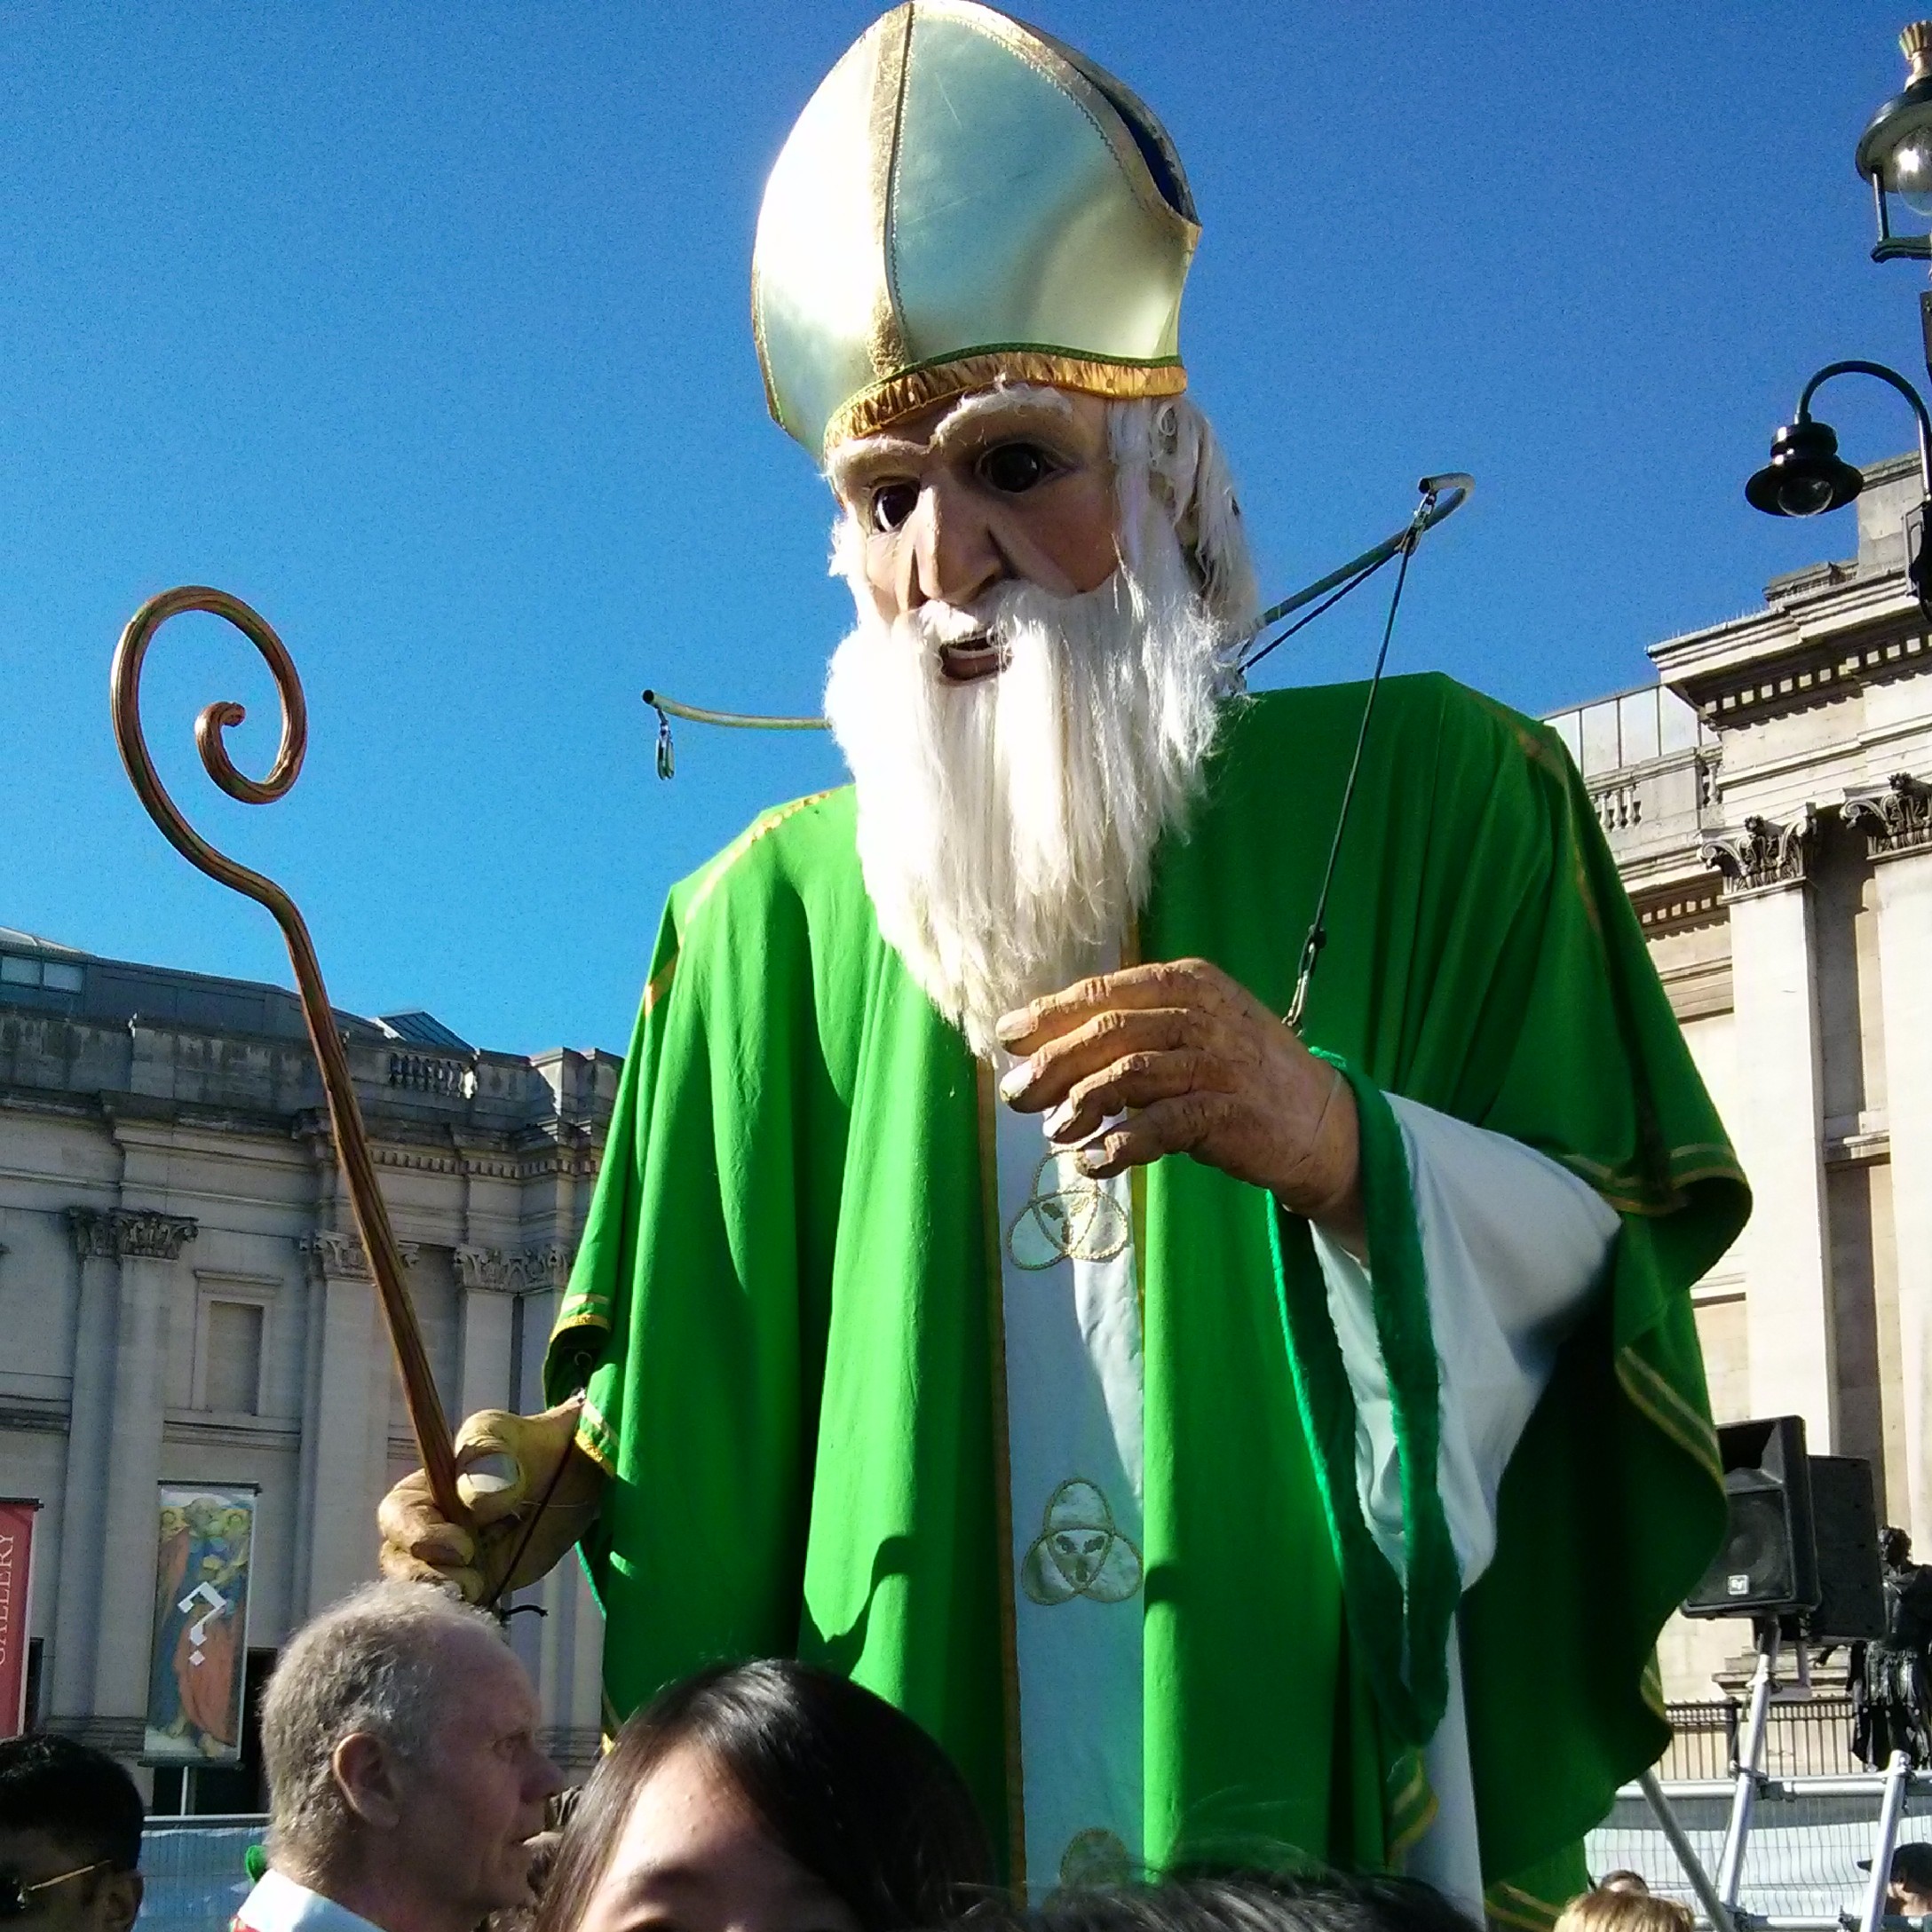 Irish Dancing at St Patrick's Day in London